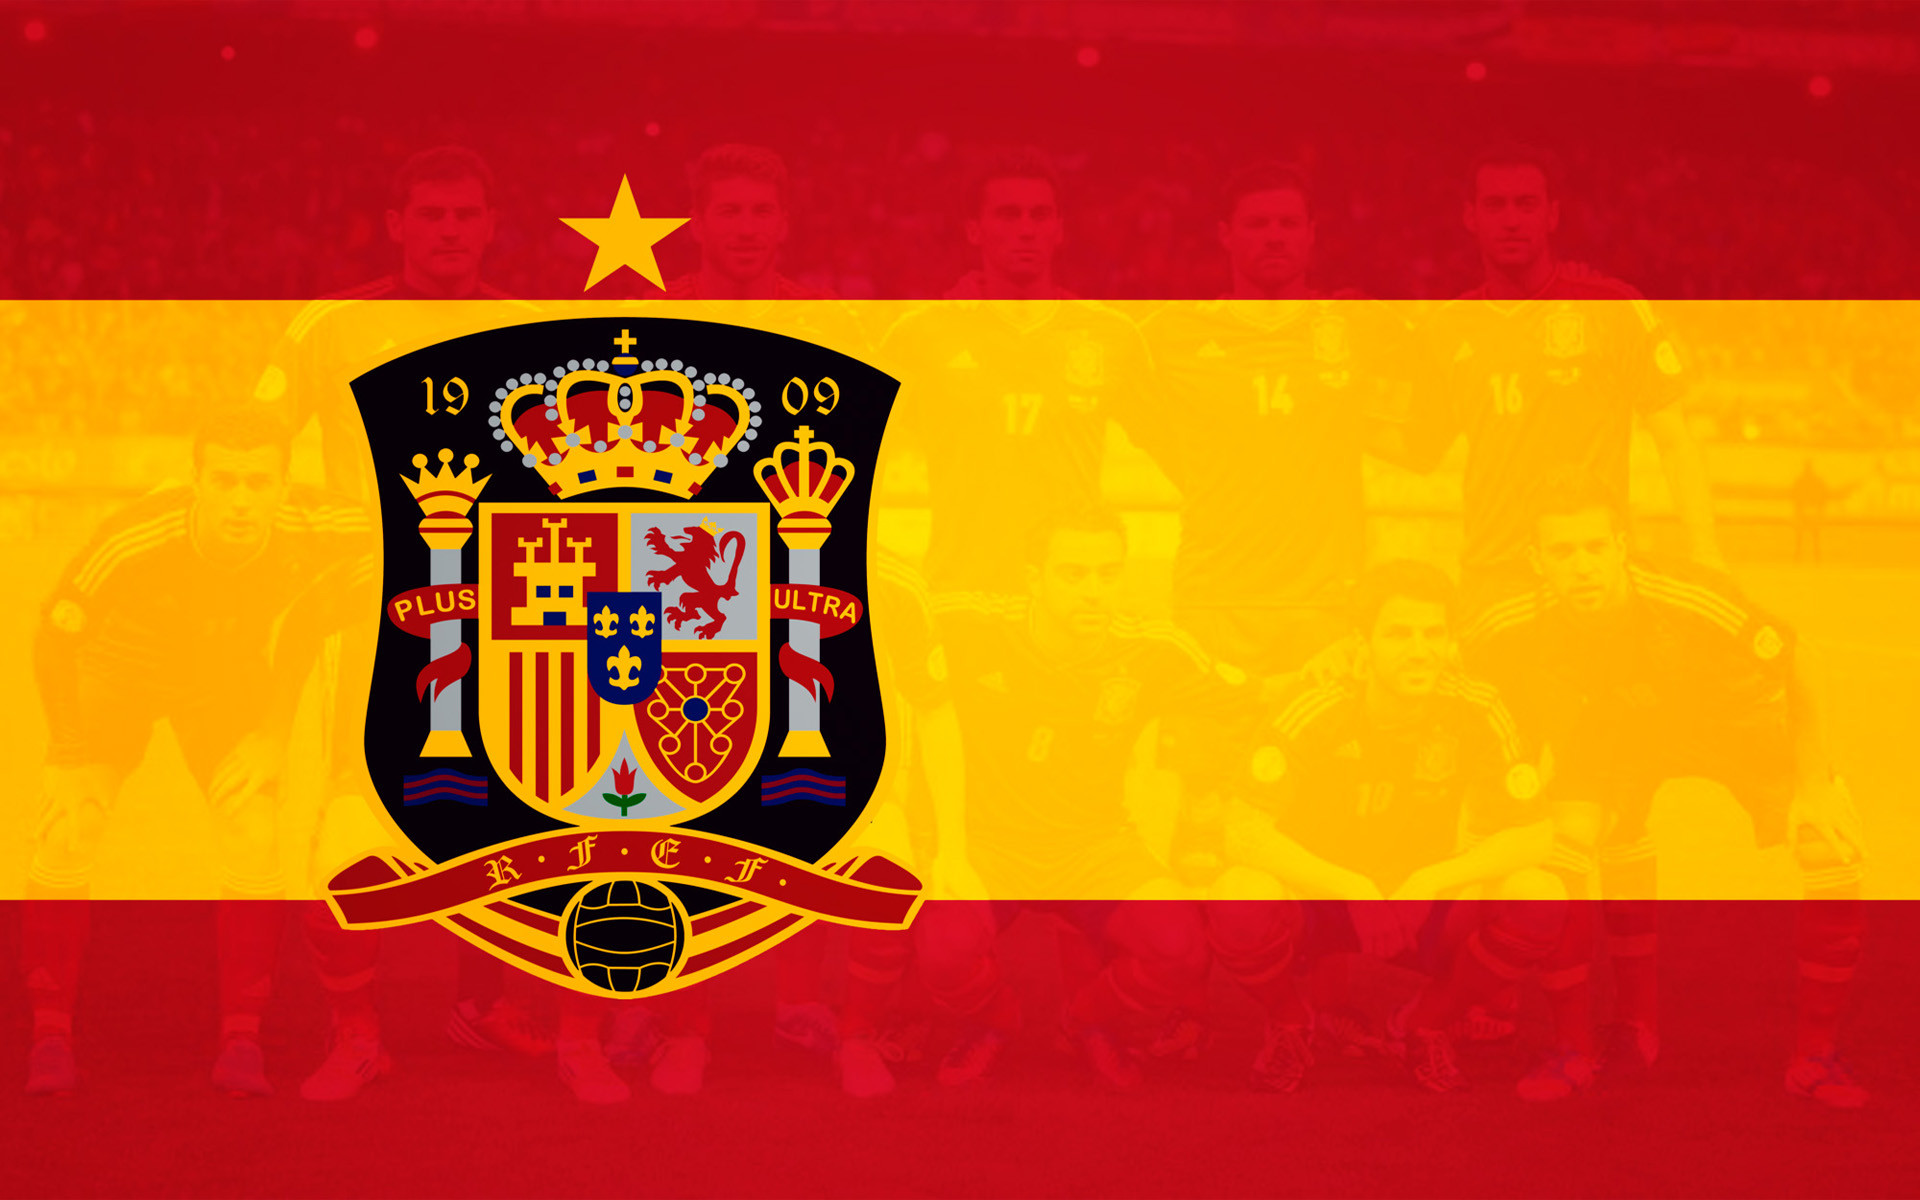 1920x1200 Spain National Football Team Wallpapers 8 | Spain National Football Team  Wallpapers | Pinterest | Team wallpaper, National football teams and  Football team